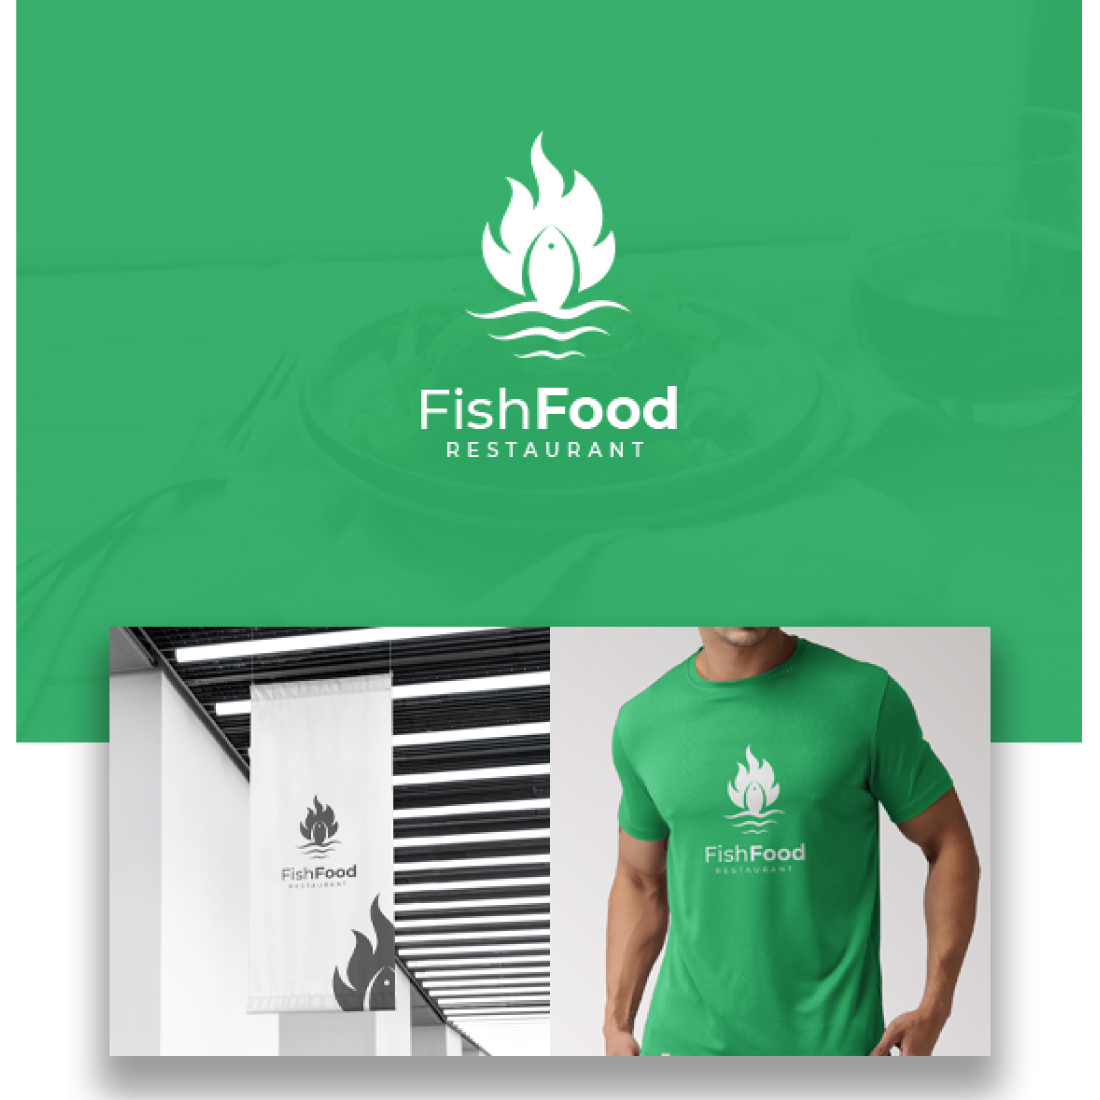 Fish Food Logo preview image.